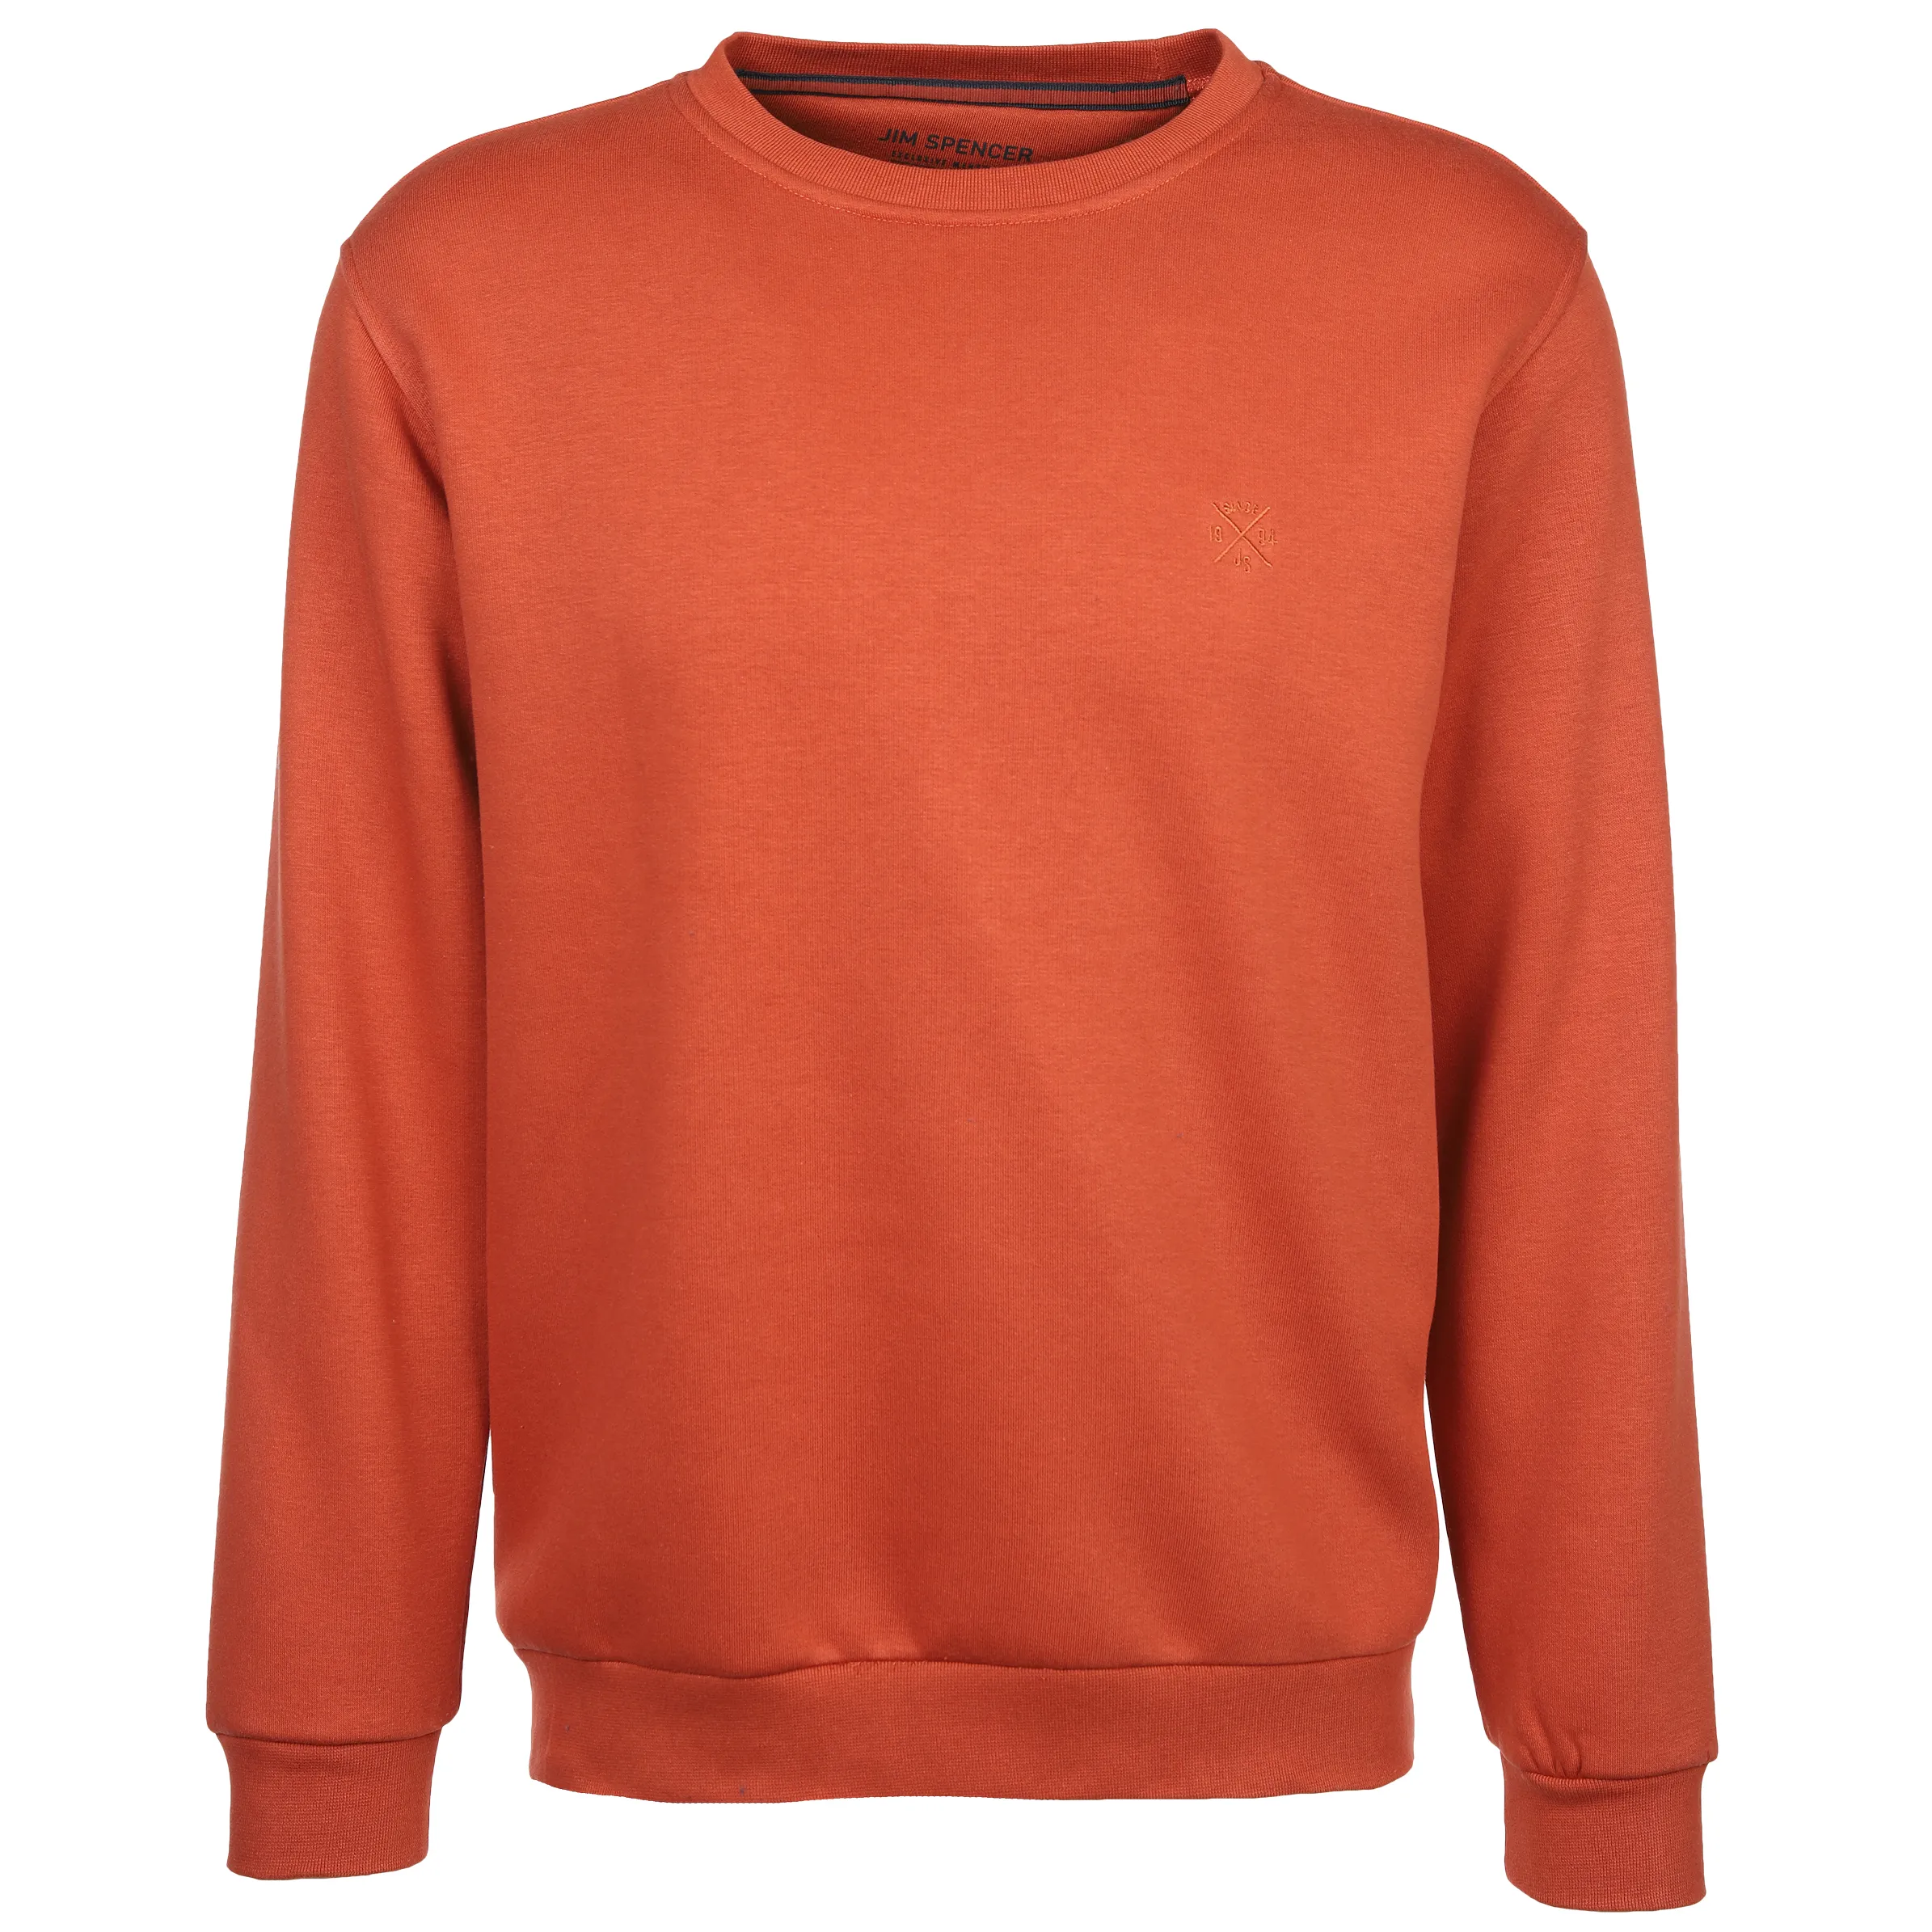 Jim Spencer He. Sweatshirt uni basic Orange 887816 ORANGE 1